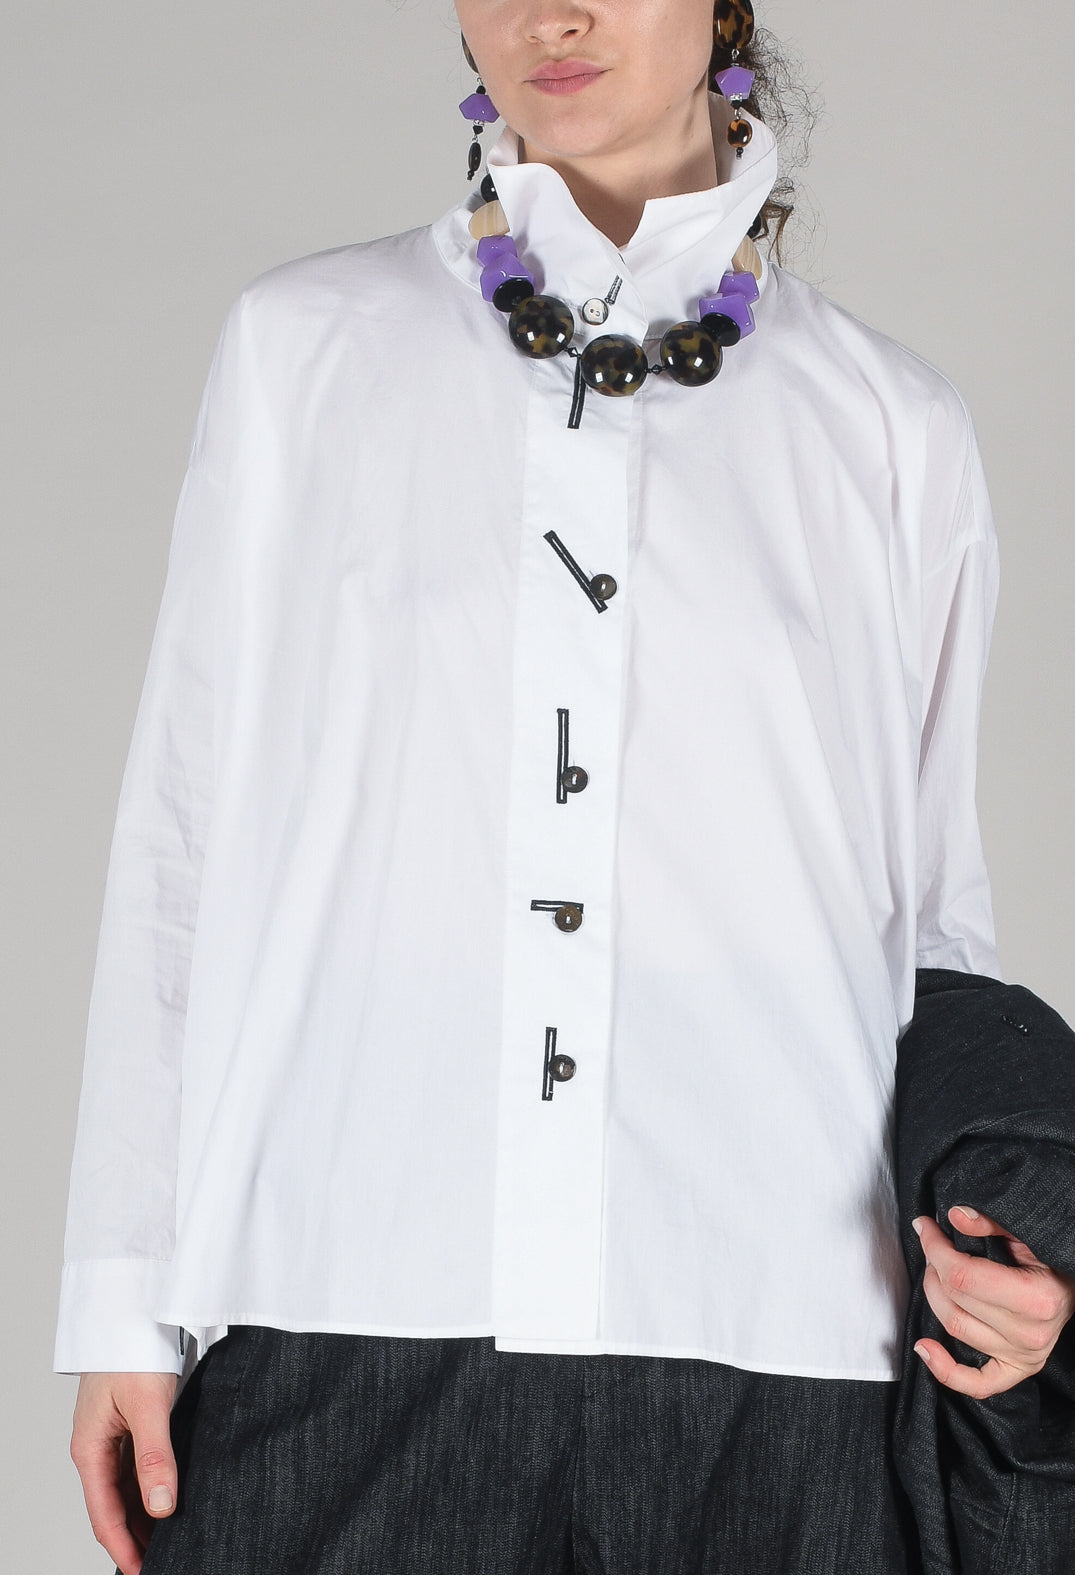 Stich Detail Shirt in White